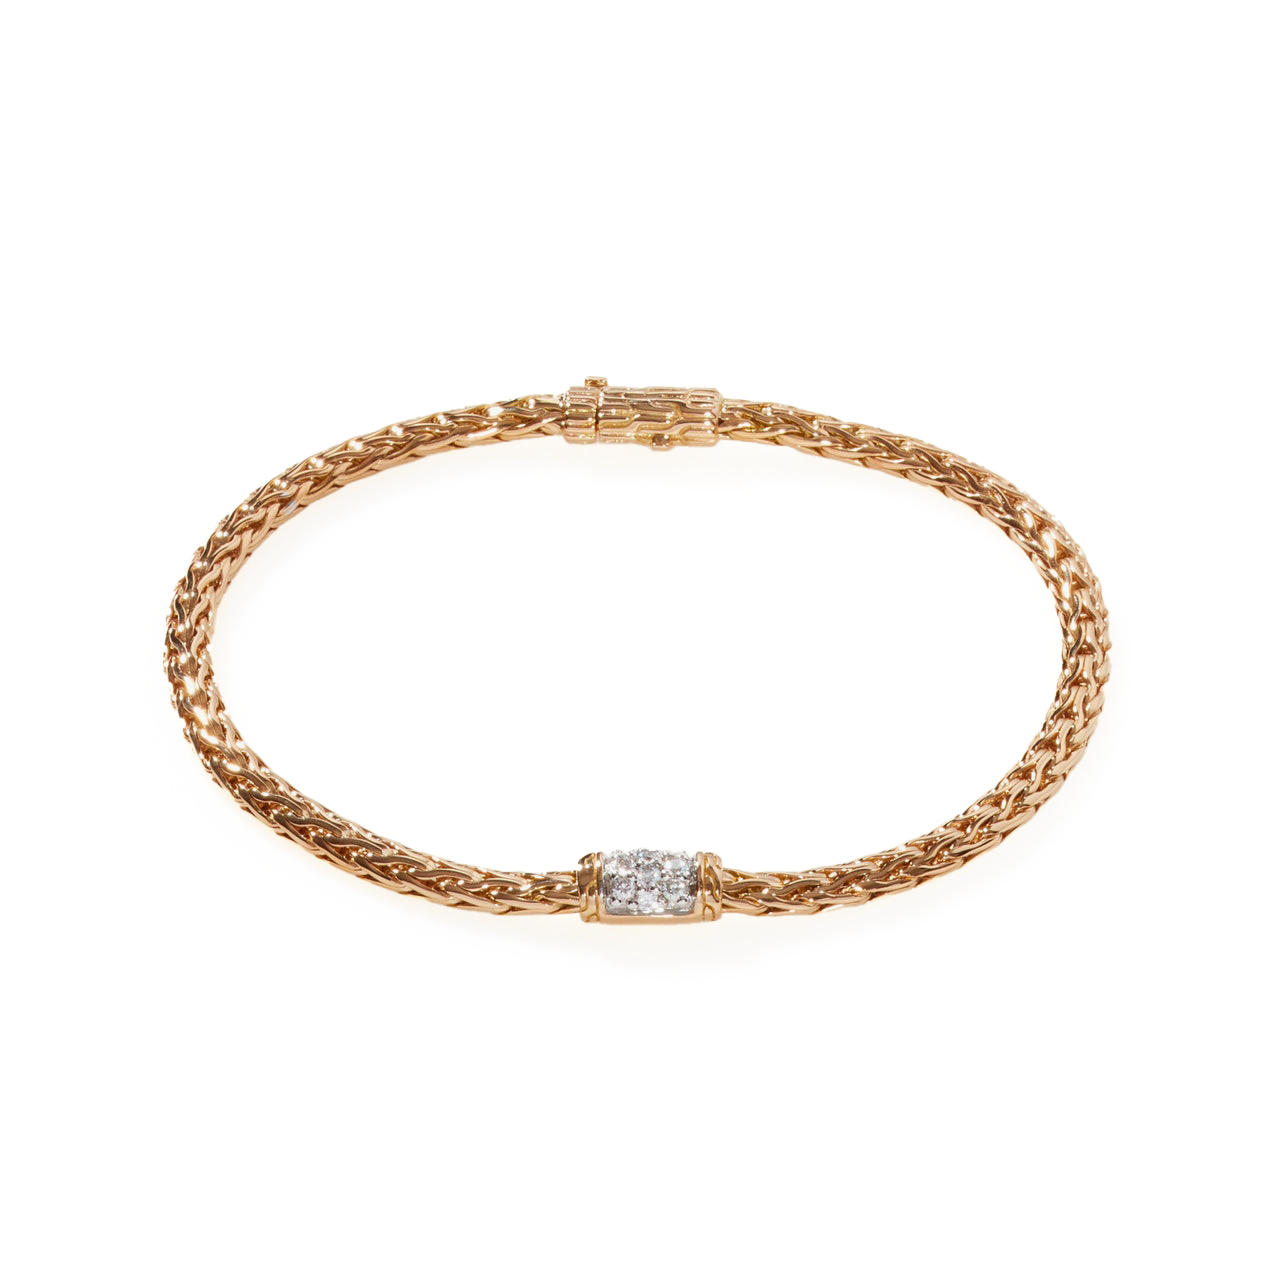 John Hardy classic white diamond chain bracelet